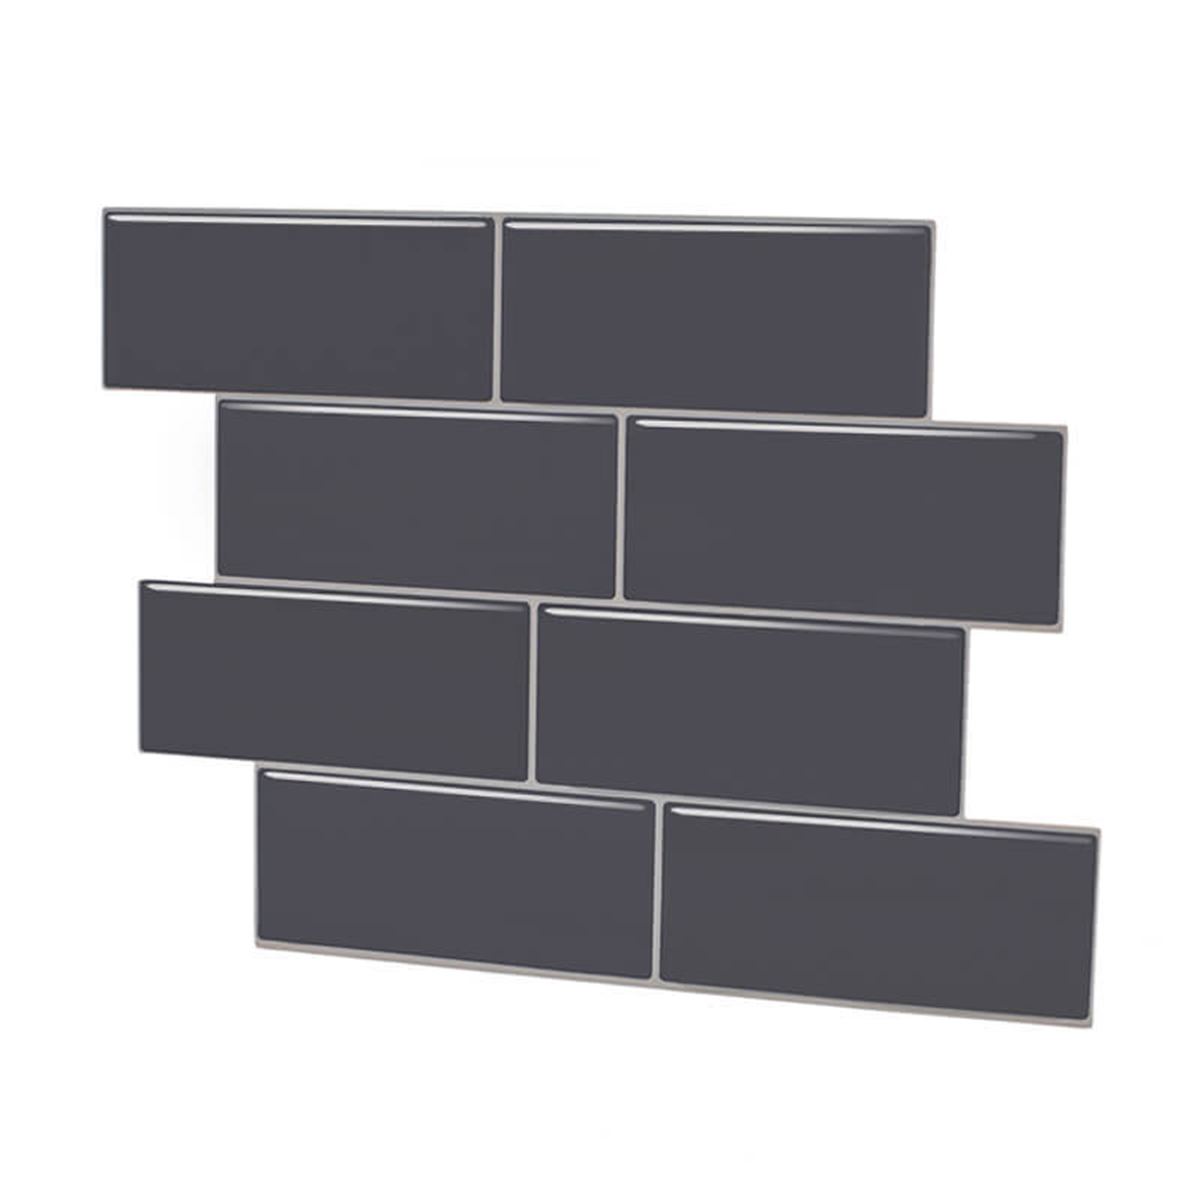 12inch-DIY-Tile-Stickers-3D-Brick-Wall-Self-adhesive-Sticker-Bathroom-Kitchen-1802619-9